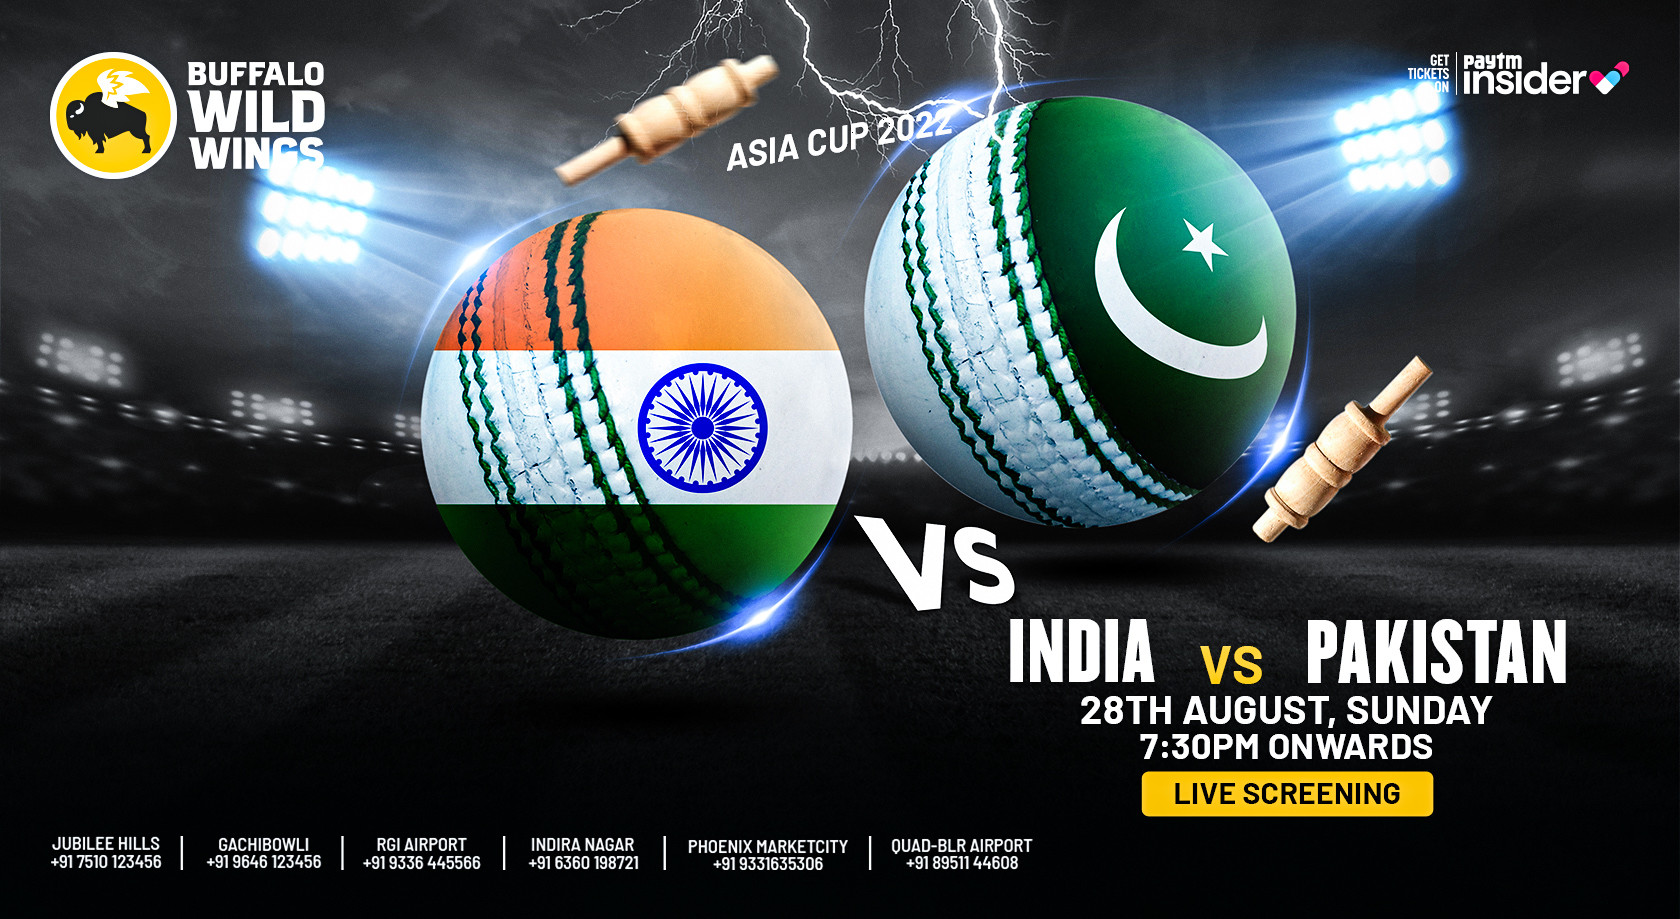 India vs Pakistan ASIA CUP Live Screening